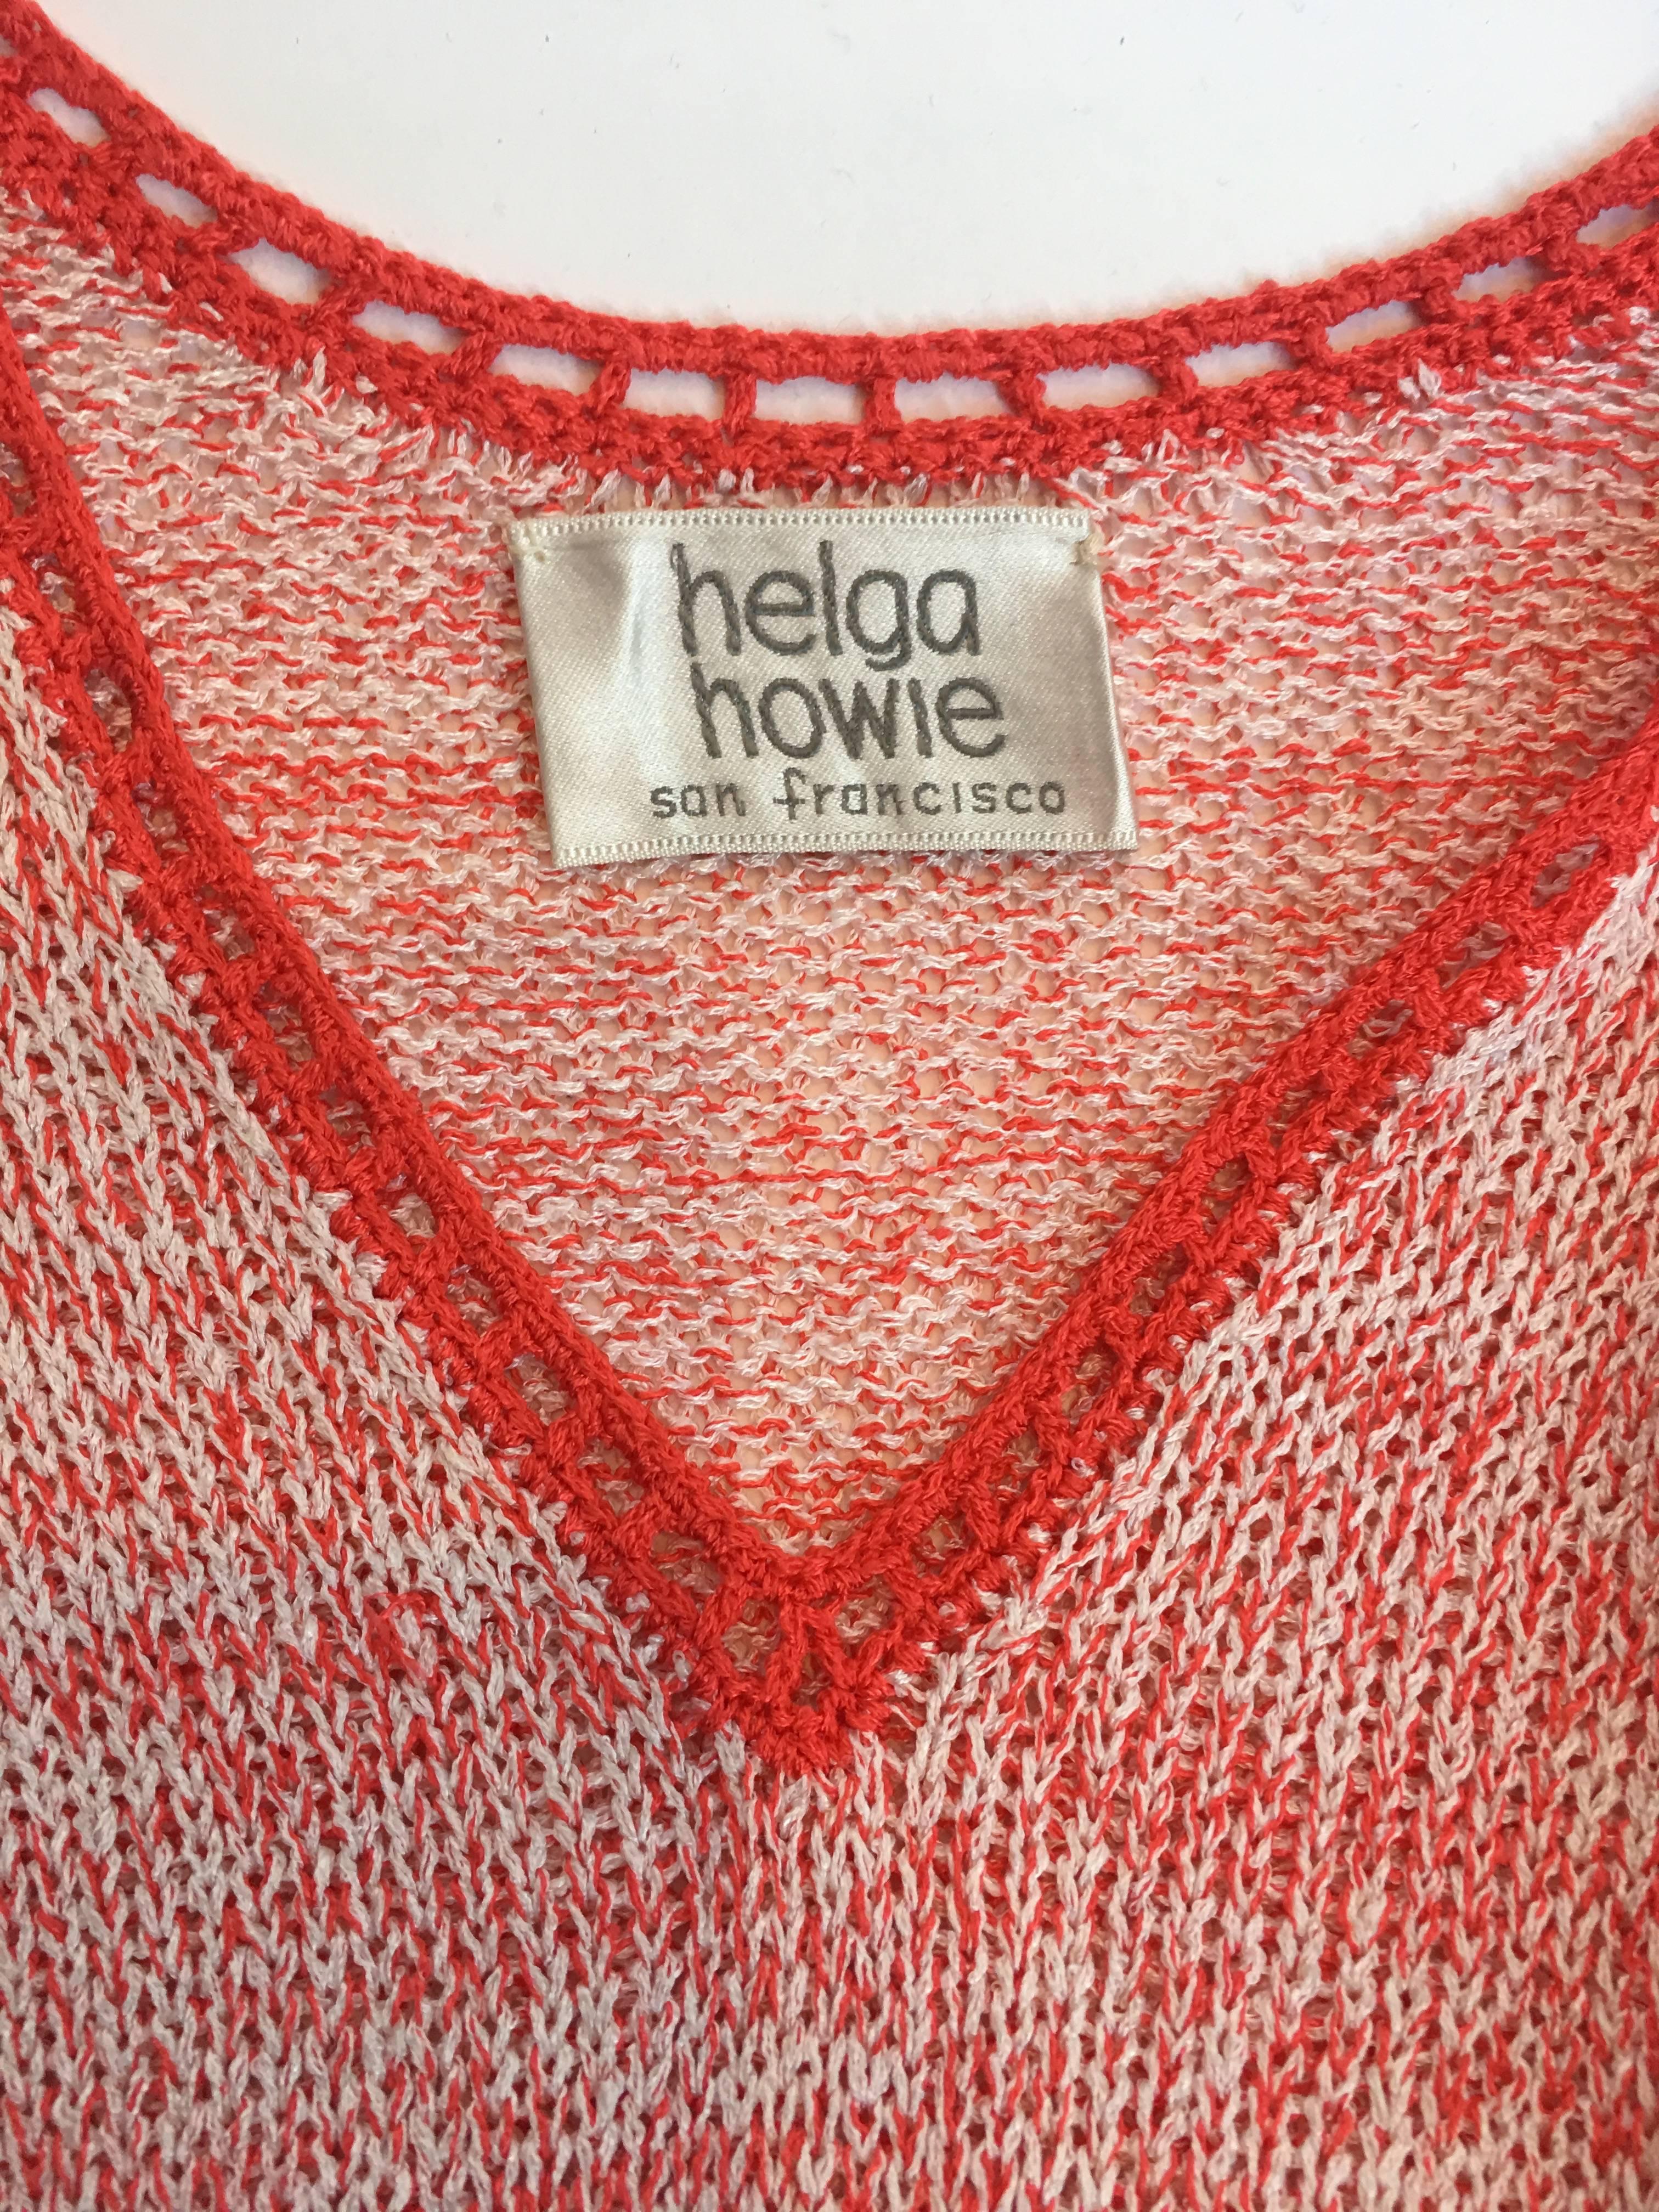 Women's or Men's 1970s Helga Howie Knit Red/White Space Dye Dress For Sale